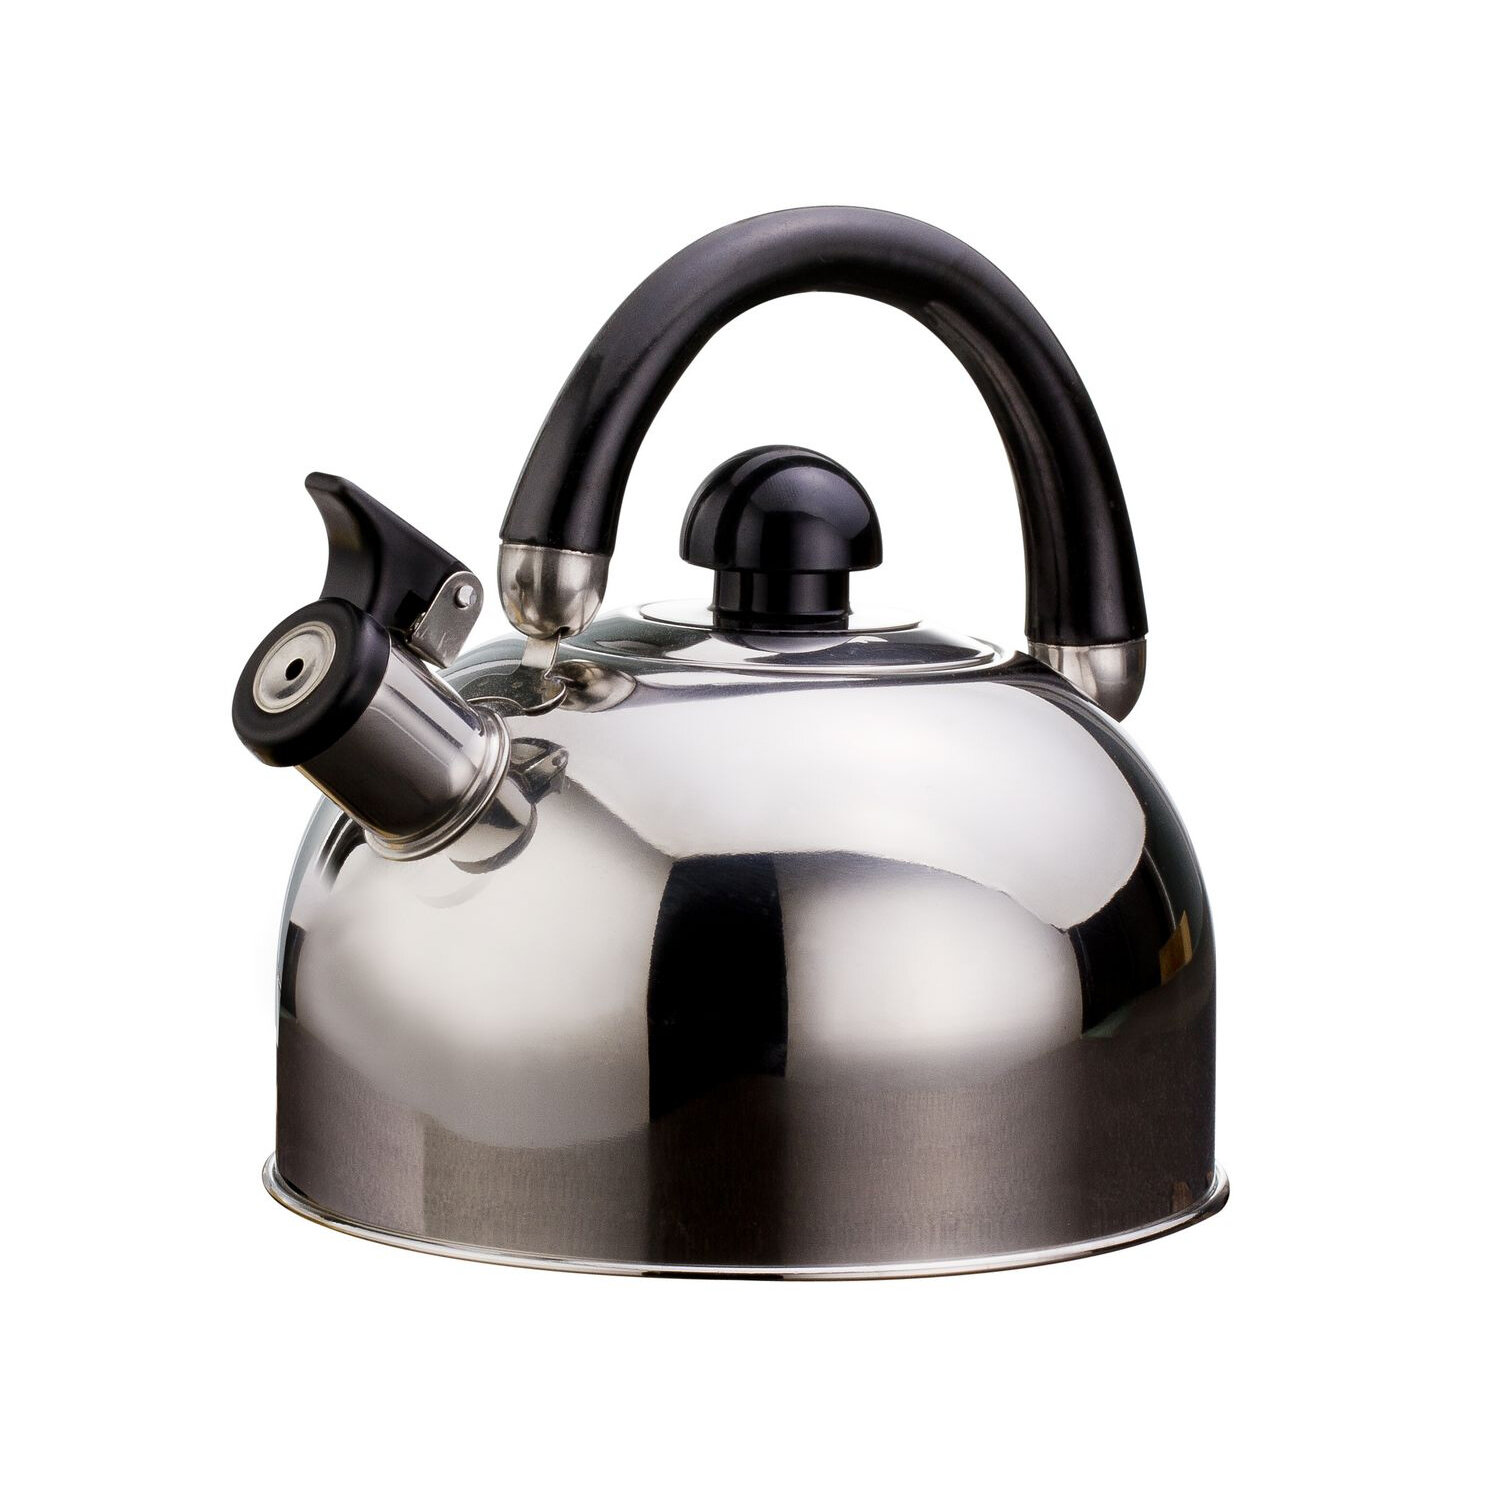 stainless steel teapot asda